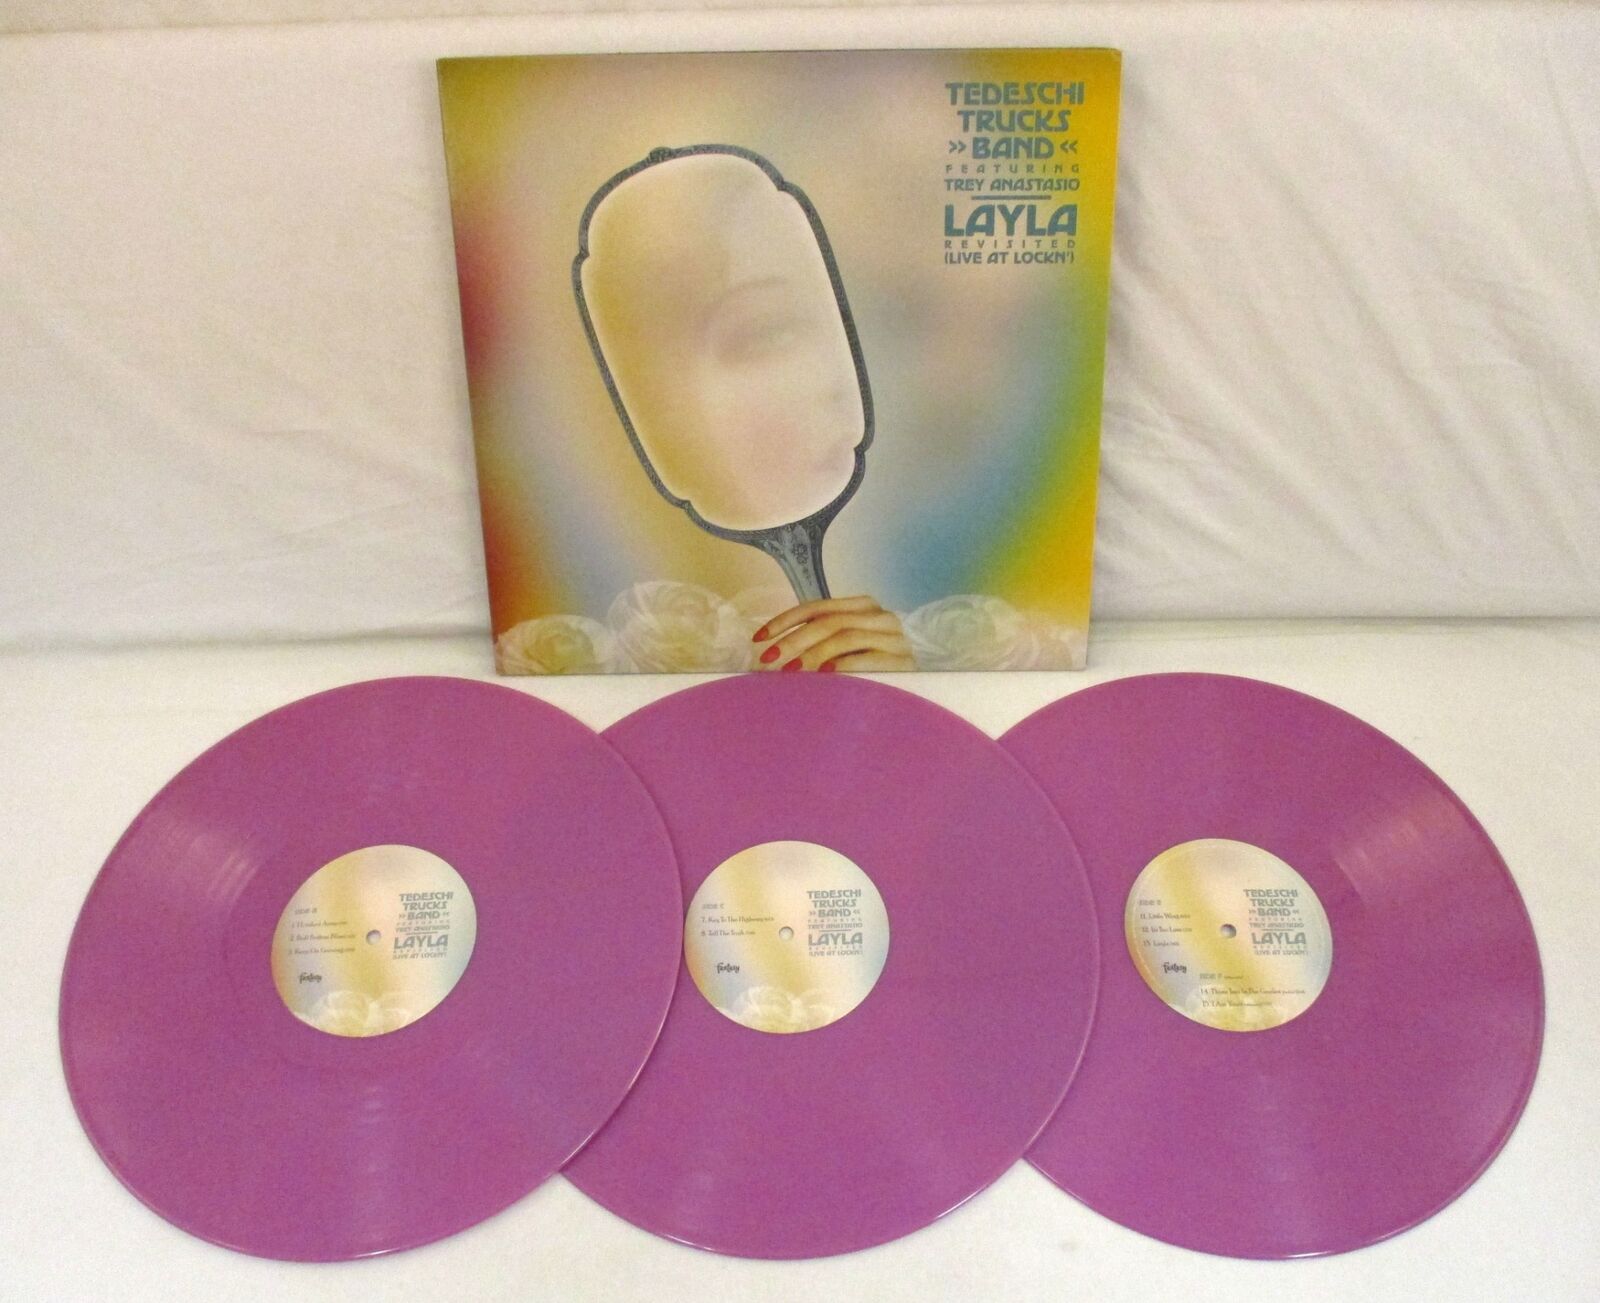 TEDESCHI TRUCKS BAND LAYLA REVISITED 3 LP BARNES & NOBLE VIOLET COLORED VINYL